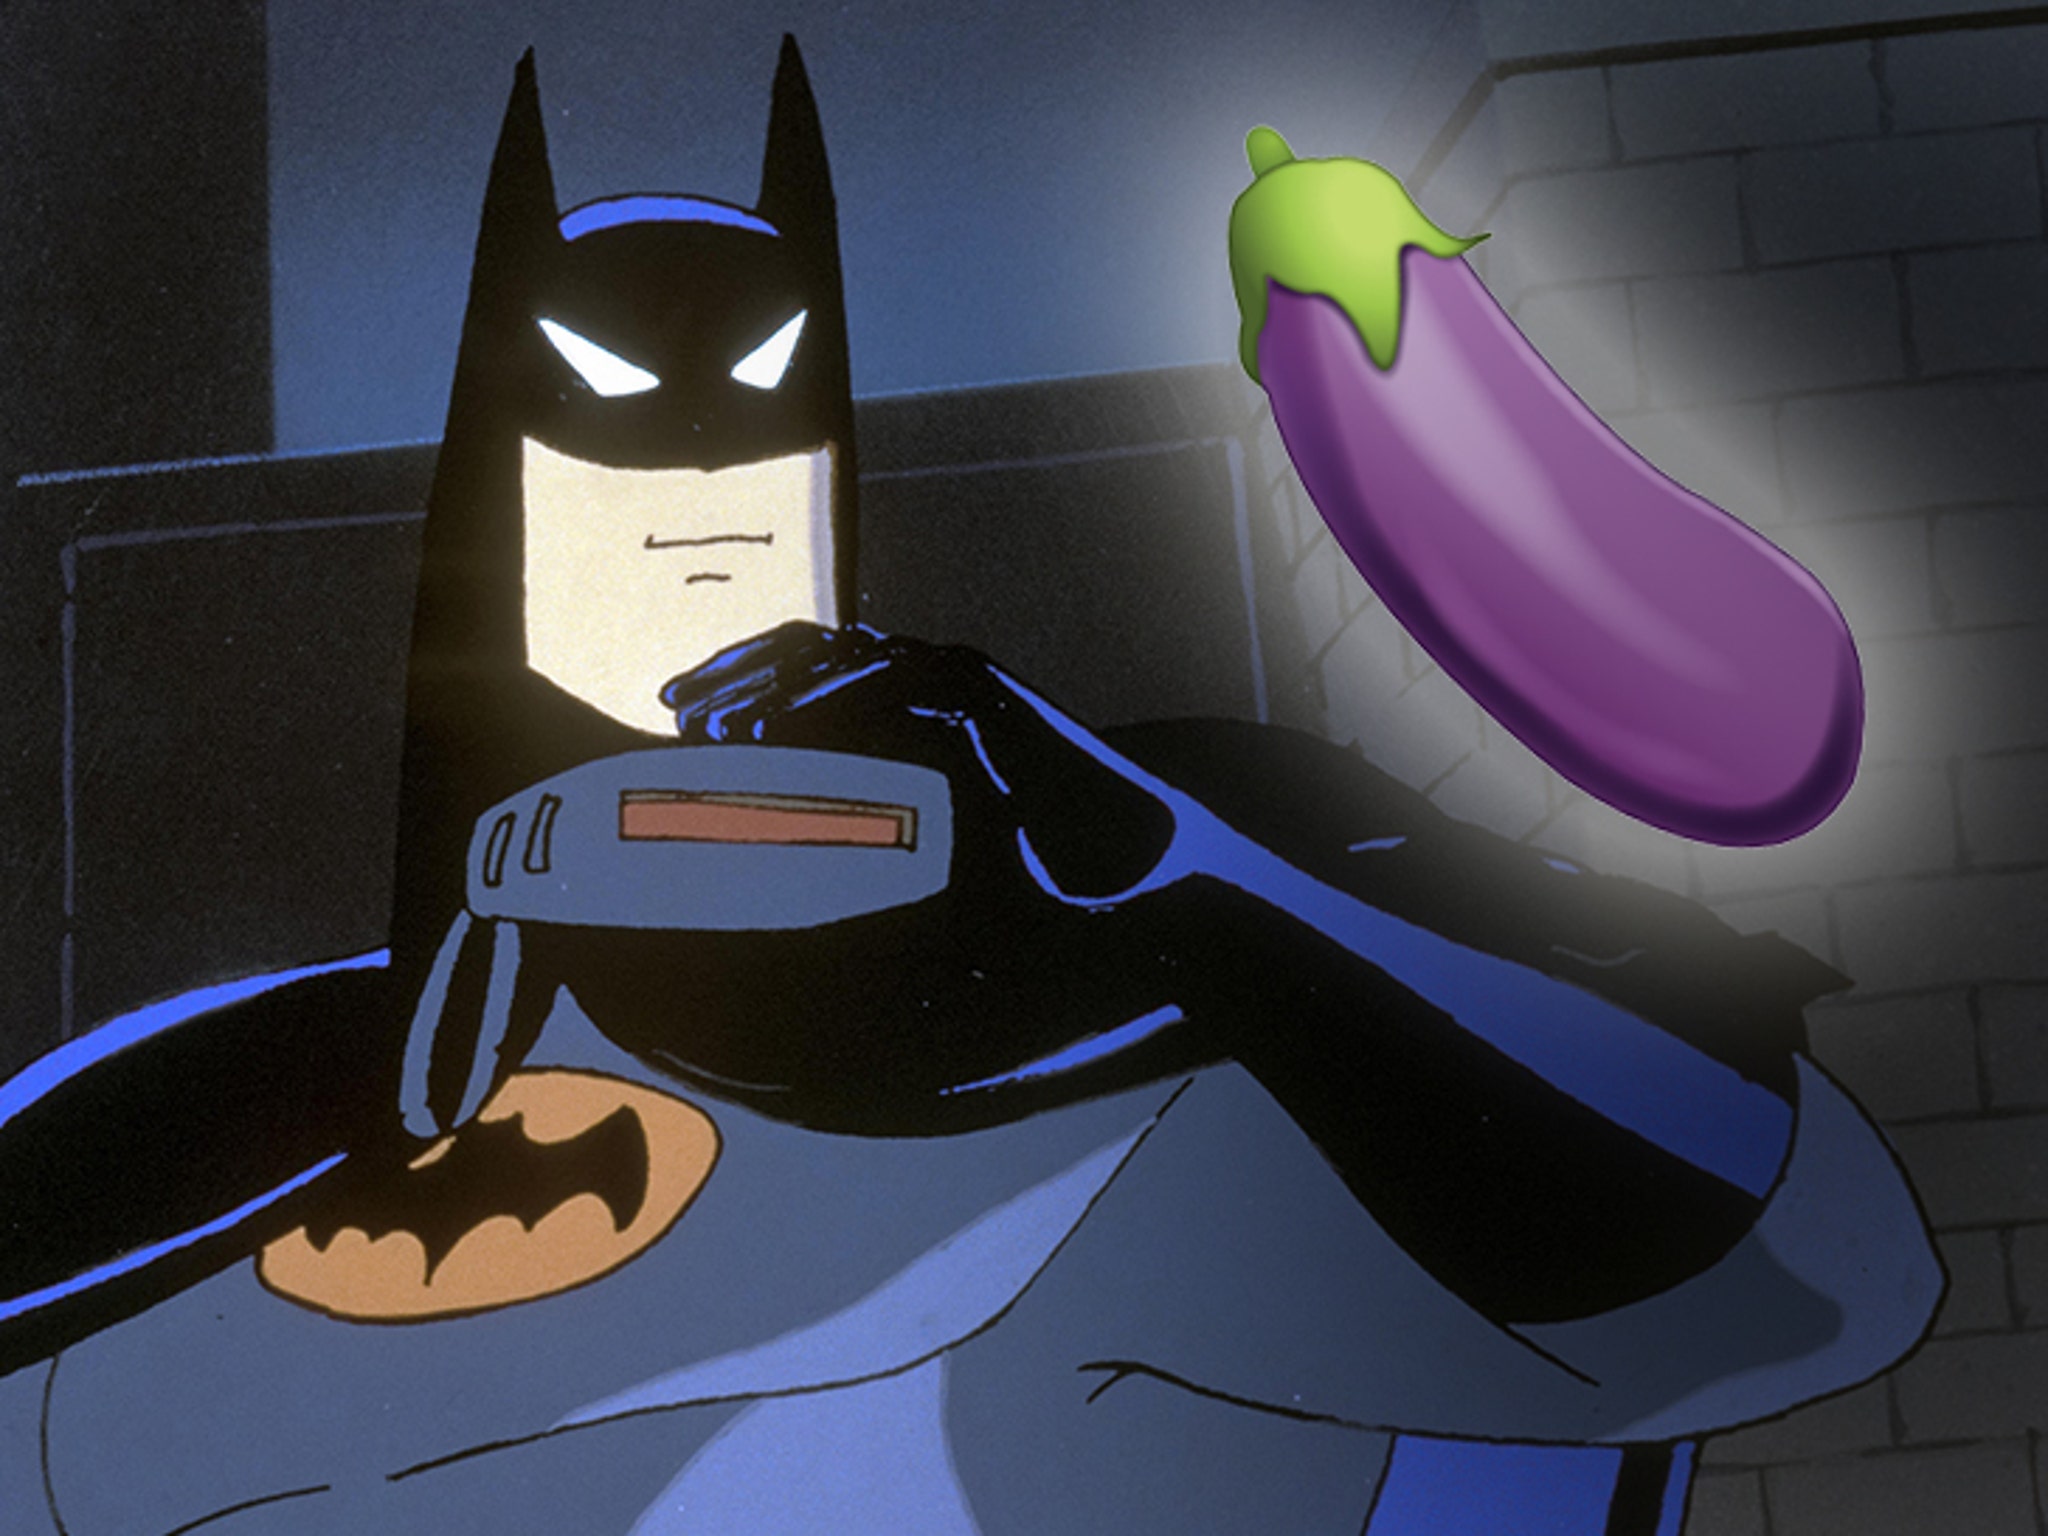 Bruce Wayne's Penis on Display in New 'Batman: Damned' Comic Series